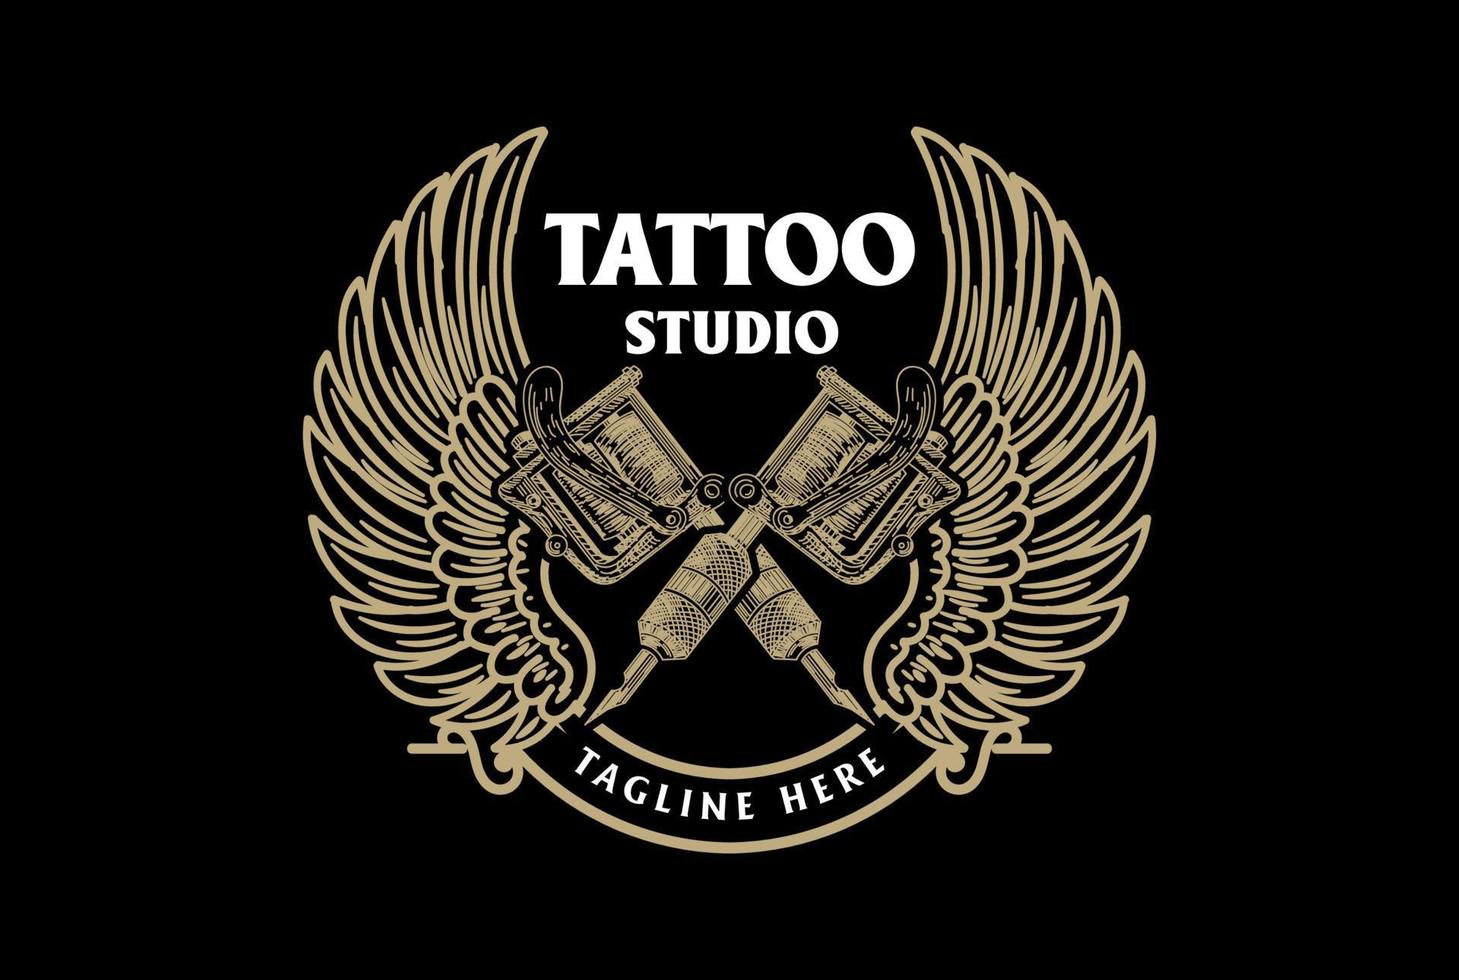 Vintage Retro Crossed Ink Tattoo Machine Wings Badge Emblem Label Logo Design vector